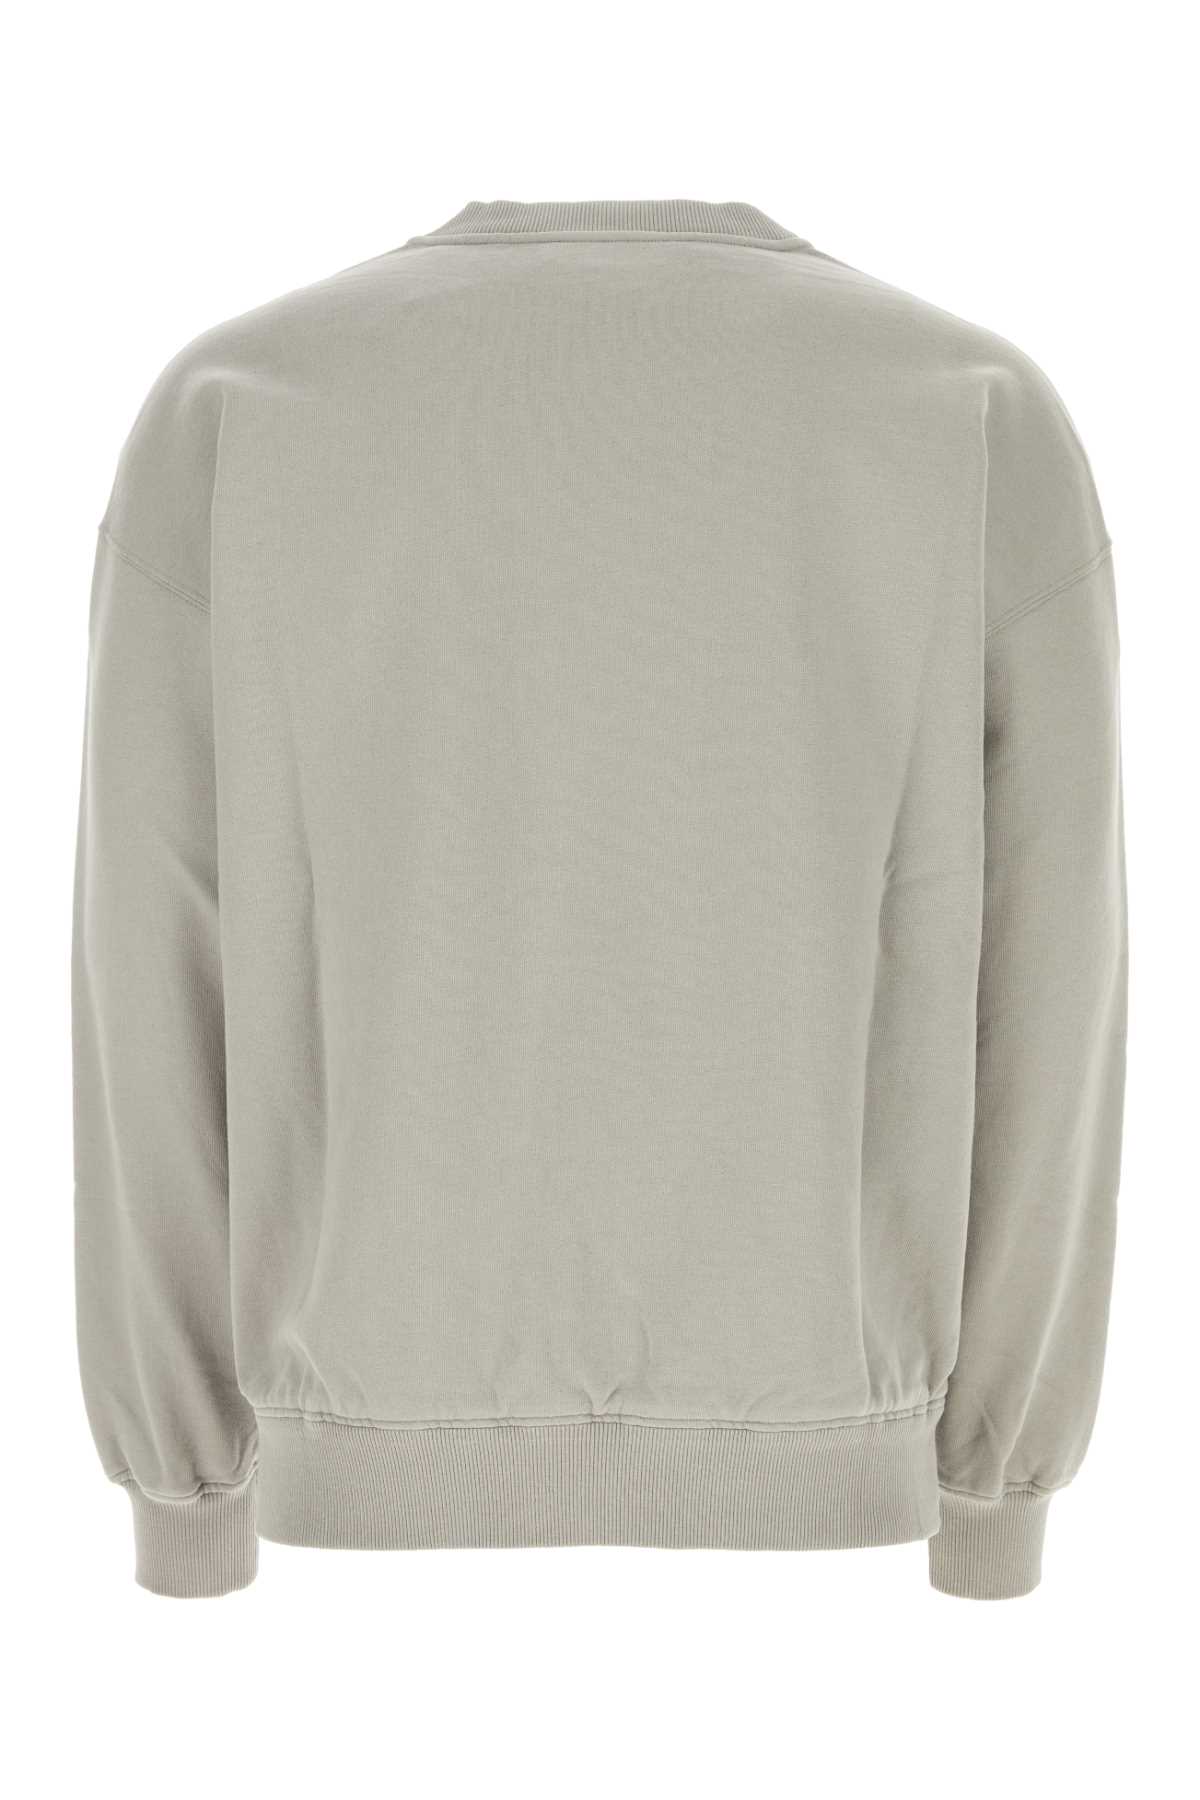 Shop Dolce & Gabbana Light Grey Cotton Sweatshirt